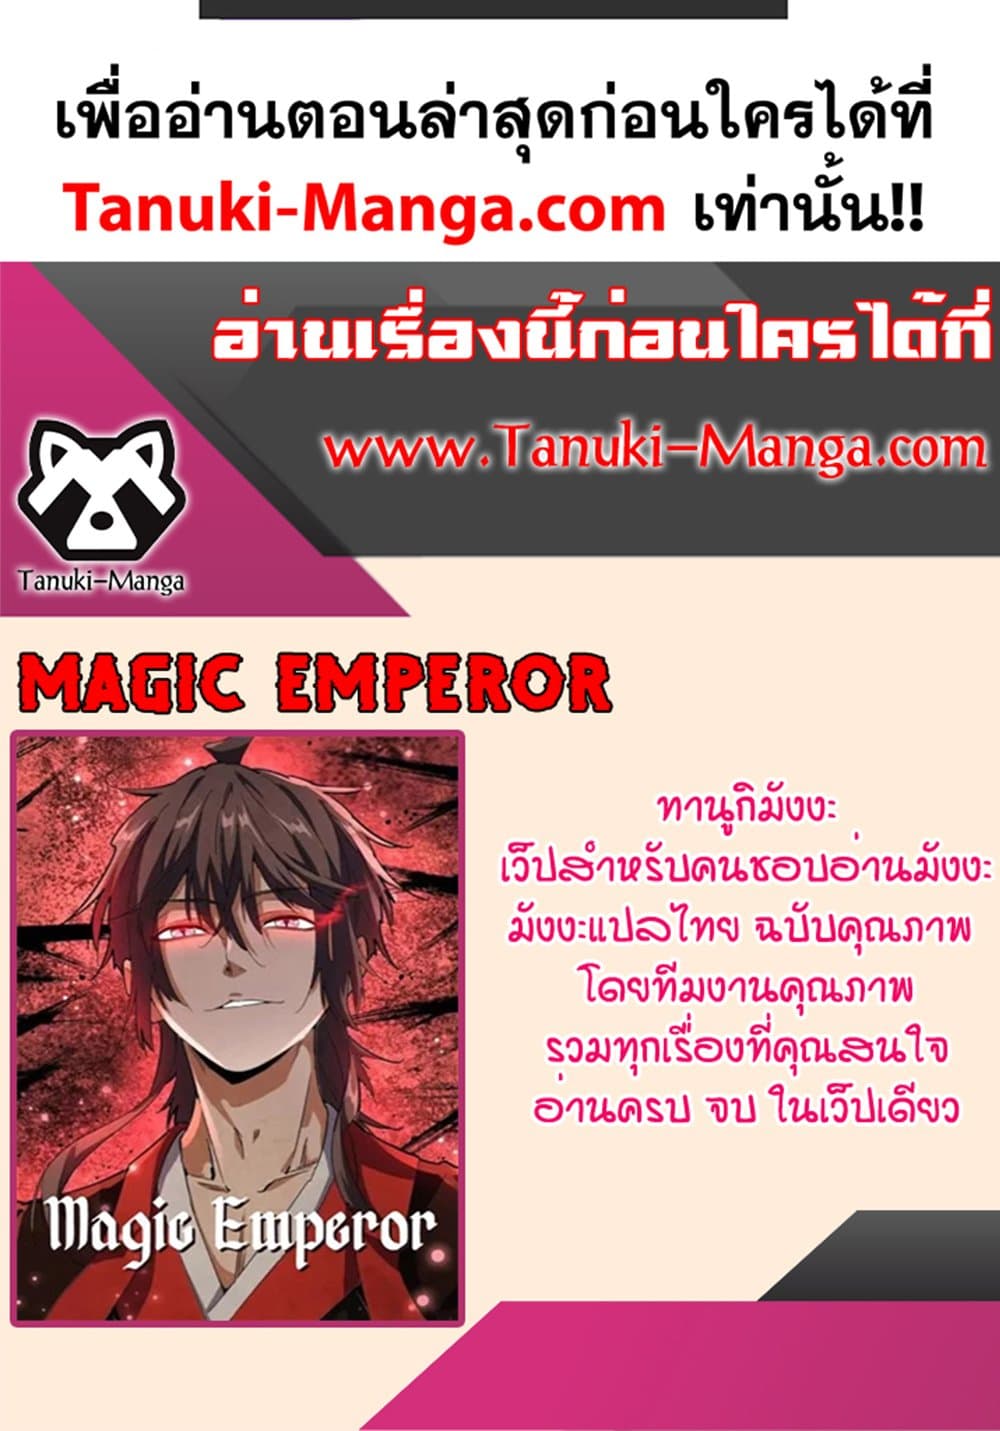 Magic Emperor 515-515